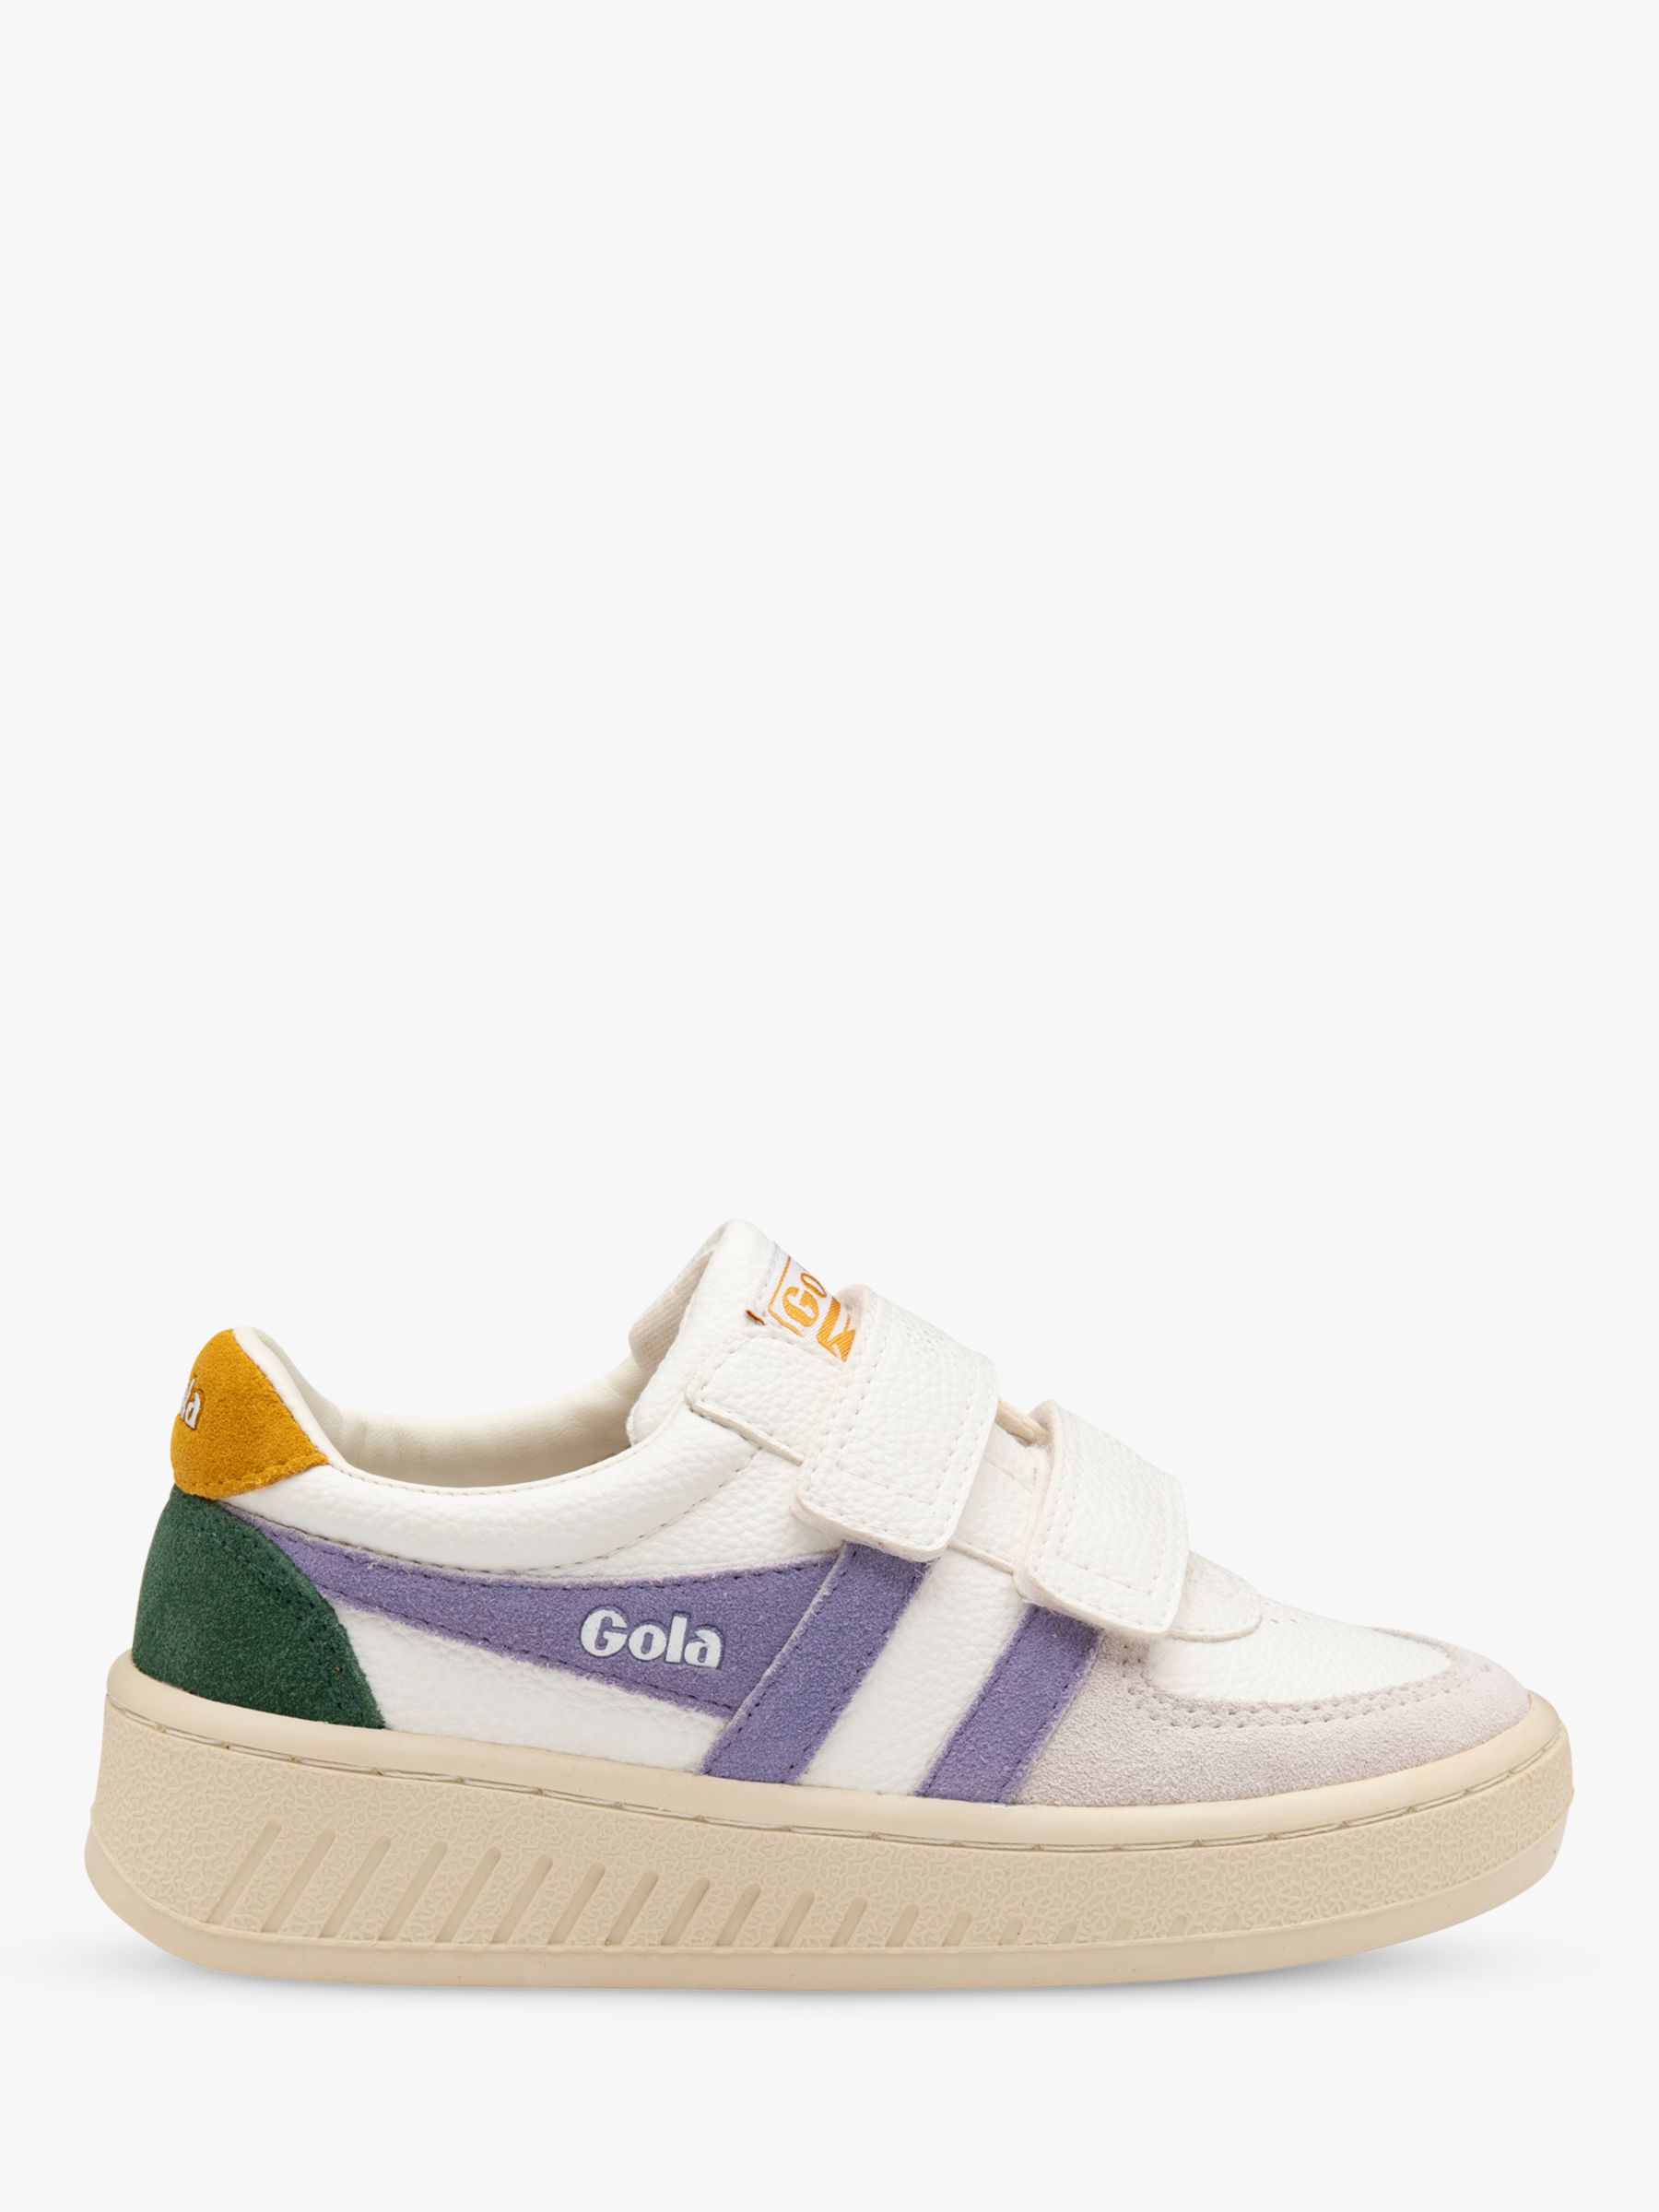 Gola Kids' Grand Slam Trident Riptape Shoes, White/Lavender/Sun, 1